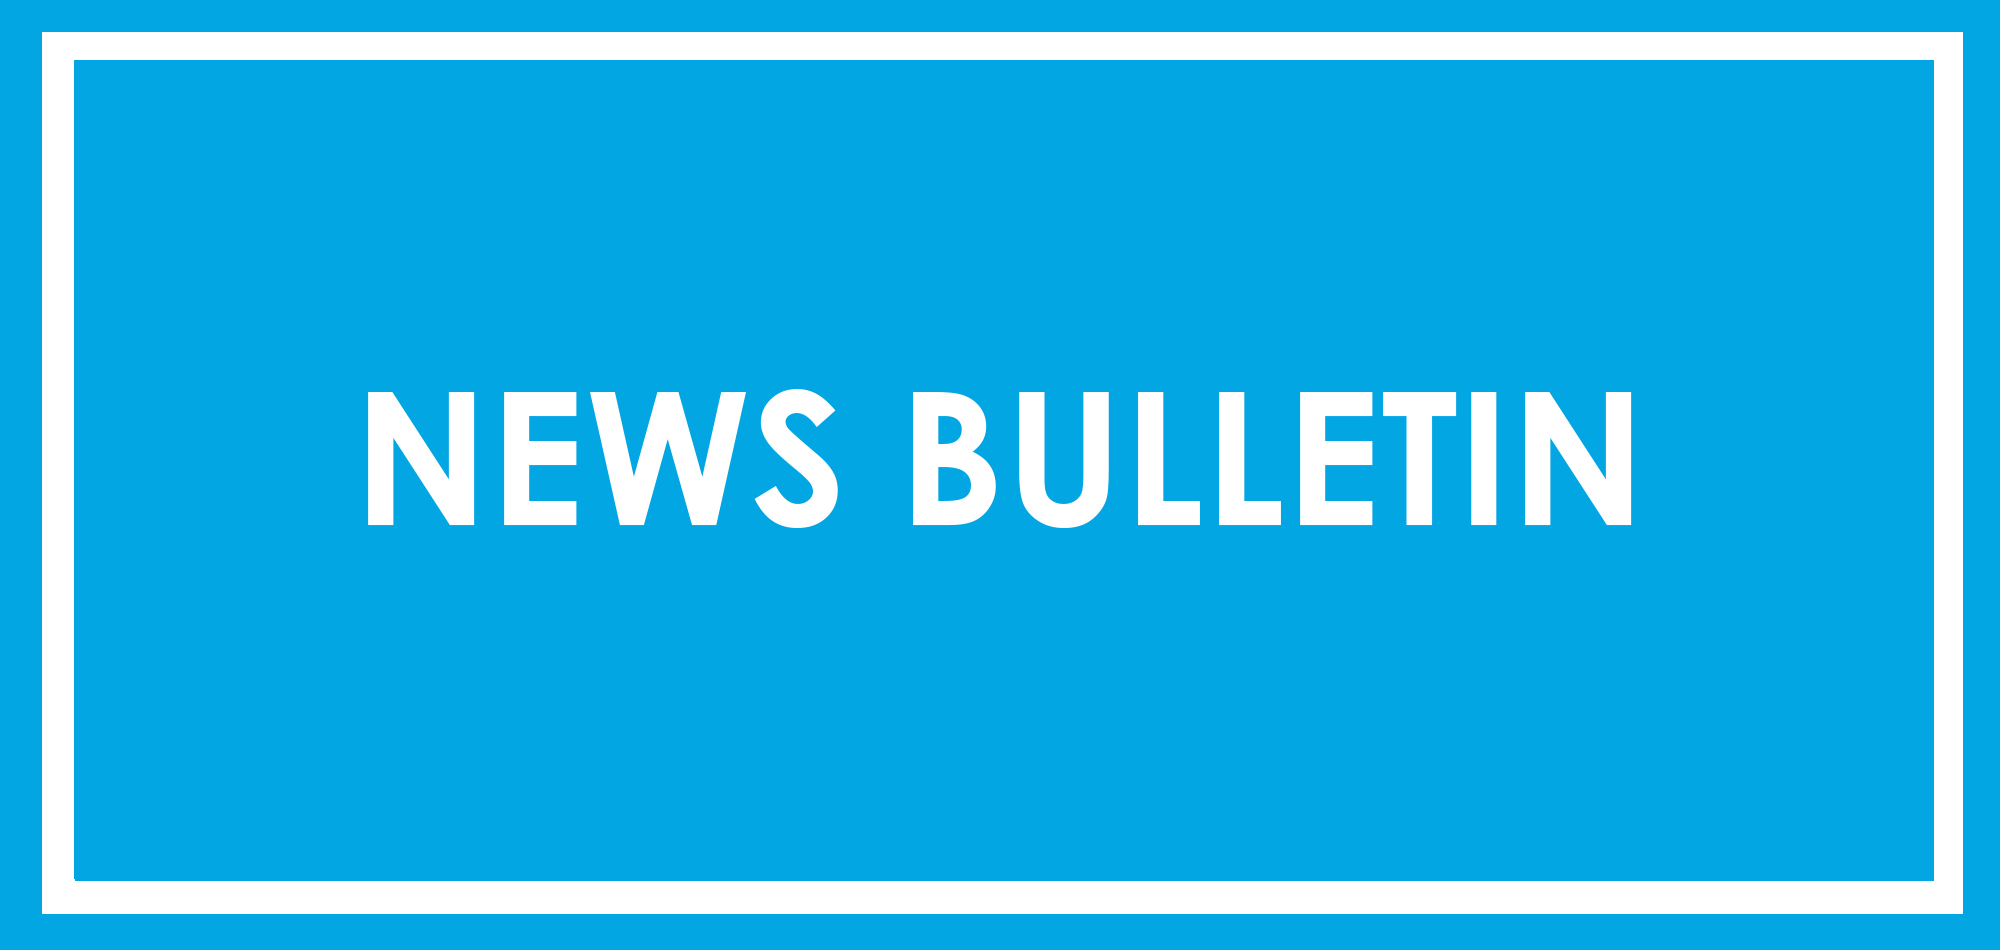 News Bulletin - 15.04.21